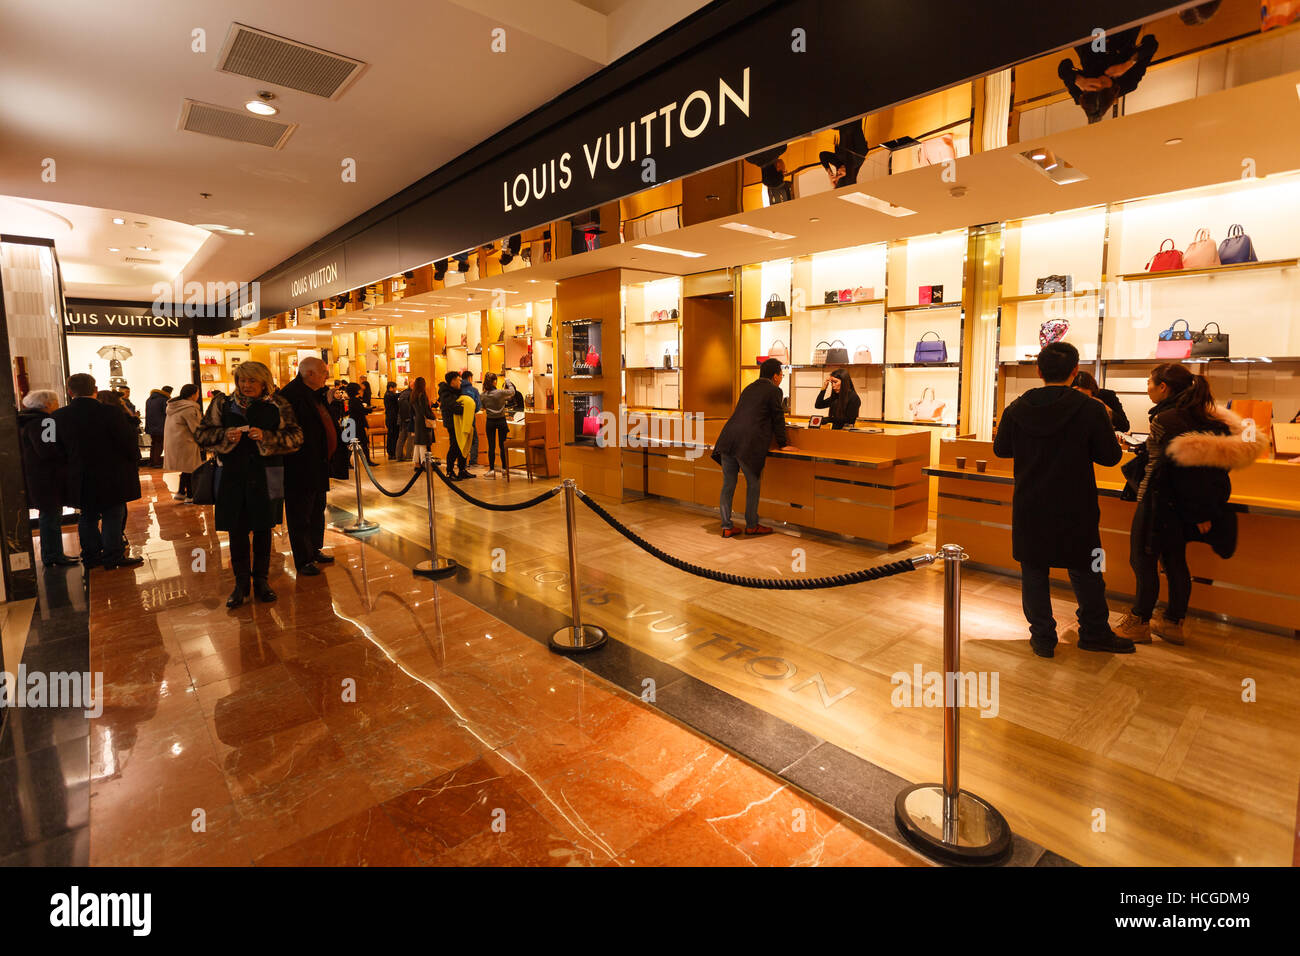 Louis Vuitton in Galeries Lafayette, Paris Stock Photo, Royalty Free Image: 128210441 - Alamy